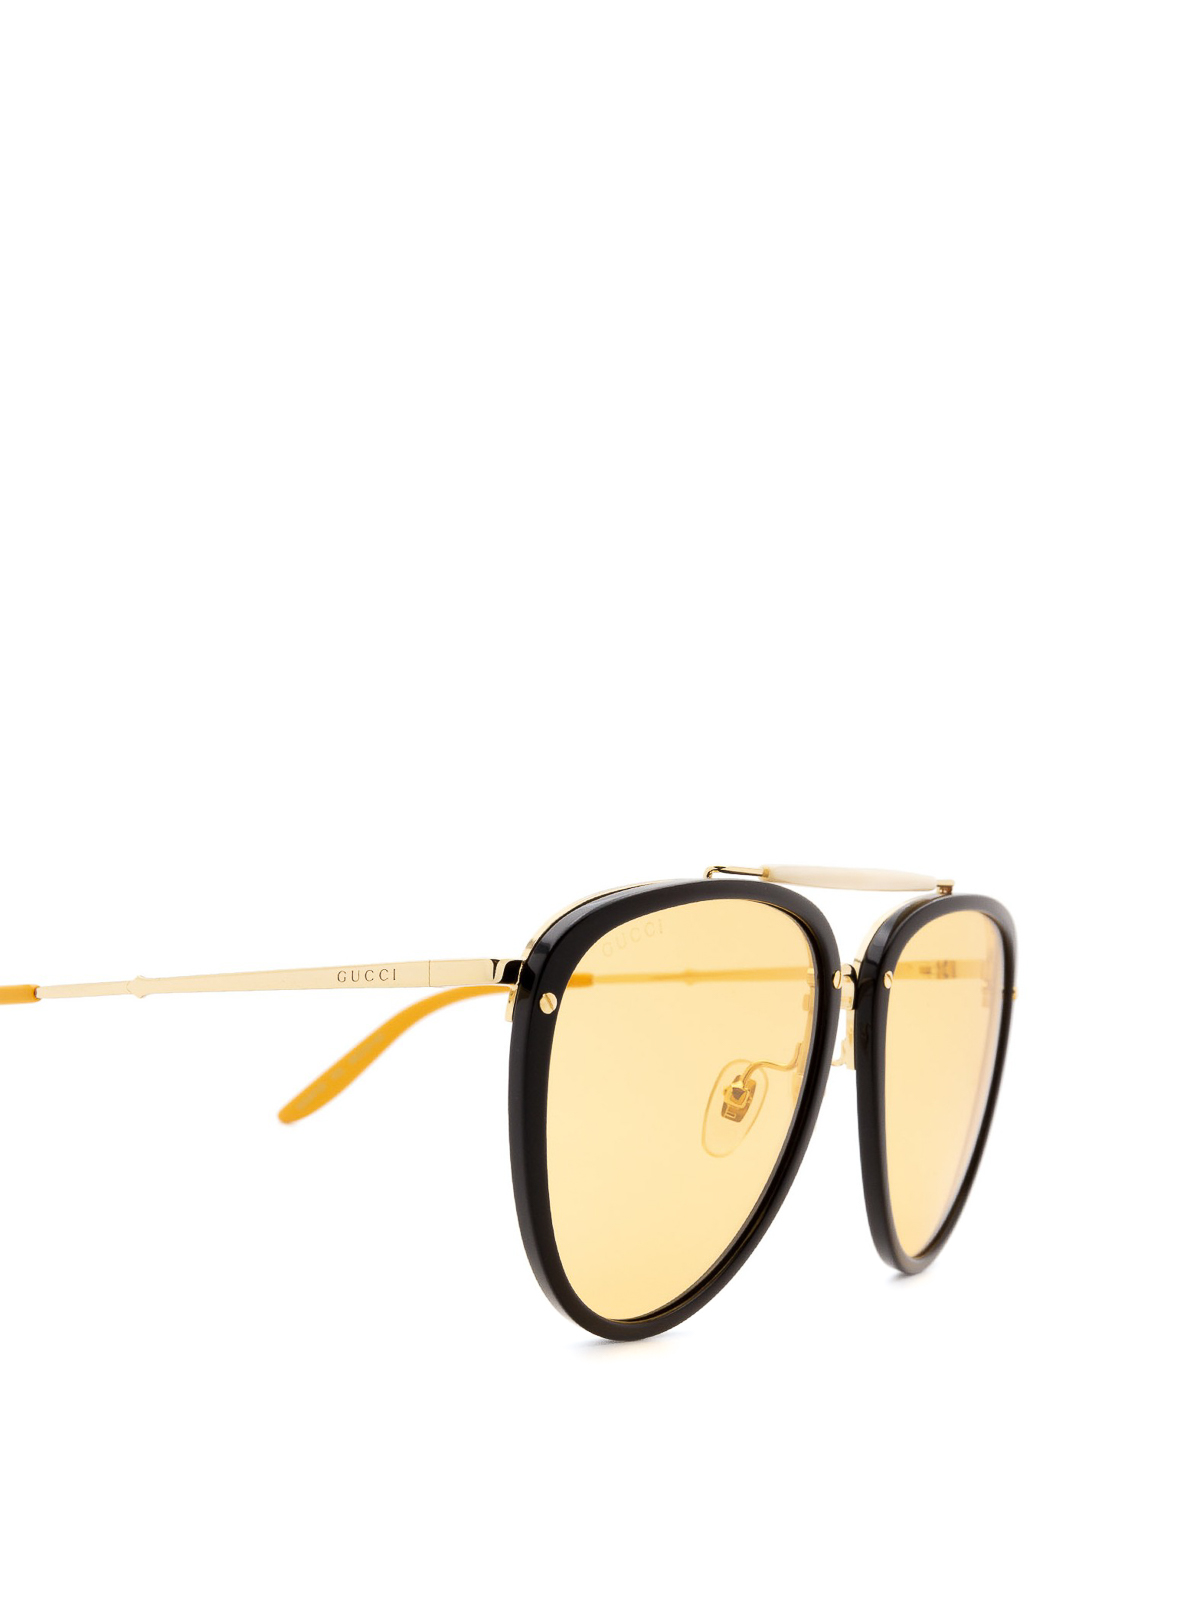 Harden en kreditor bestemt Sunglasses Gucci - Yellow lenses drop shaped sunglasses - GG0672SBLACK